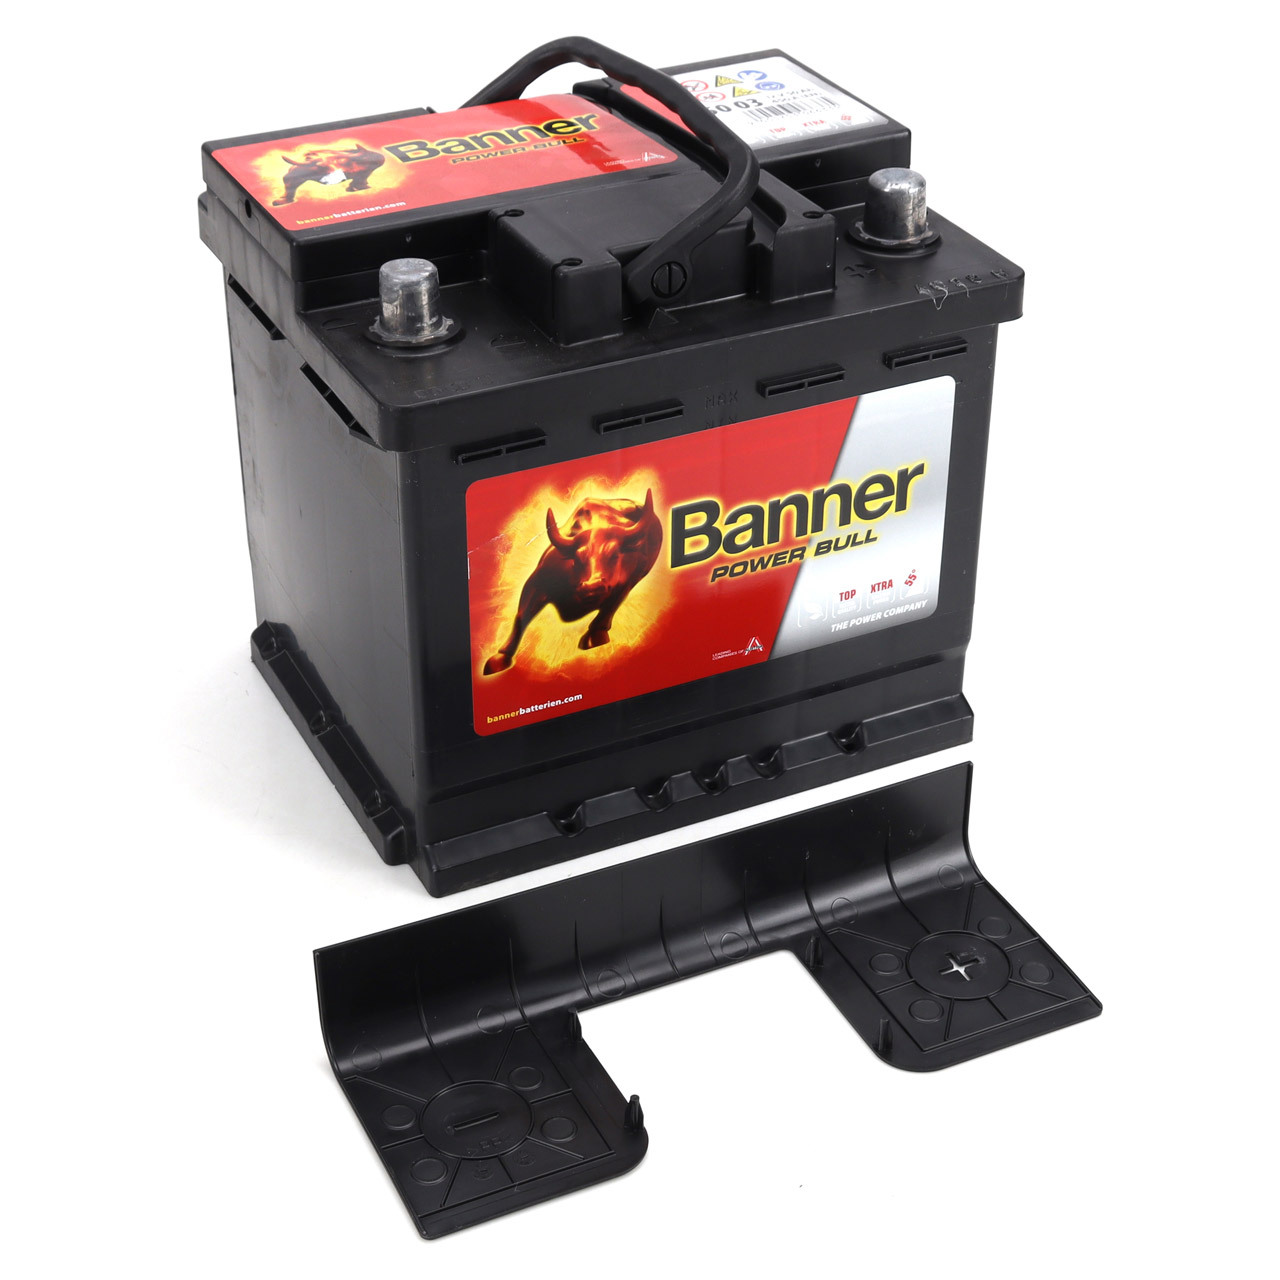 BANNER ENGINEERING Starterbatterien / Autobatterien - 013550030101